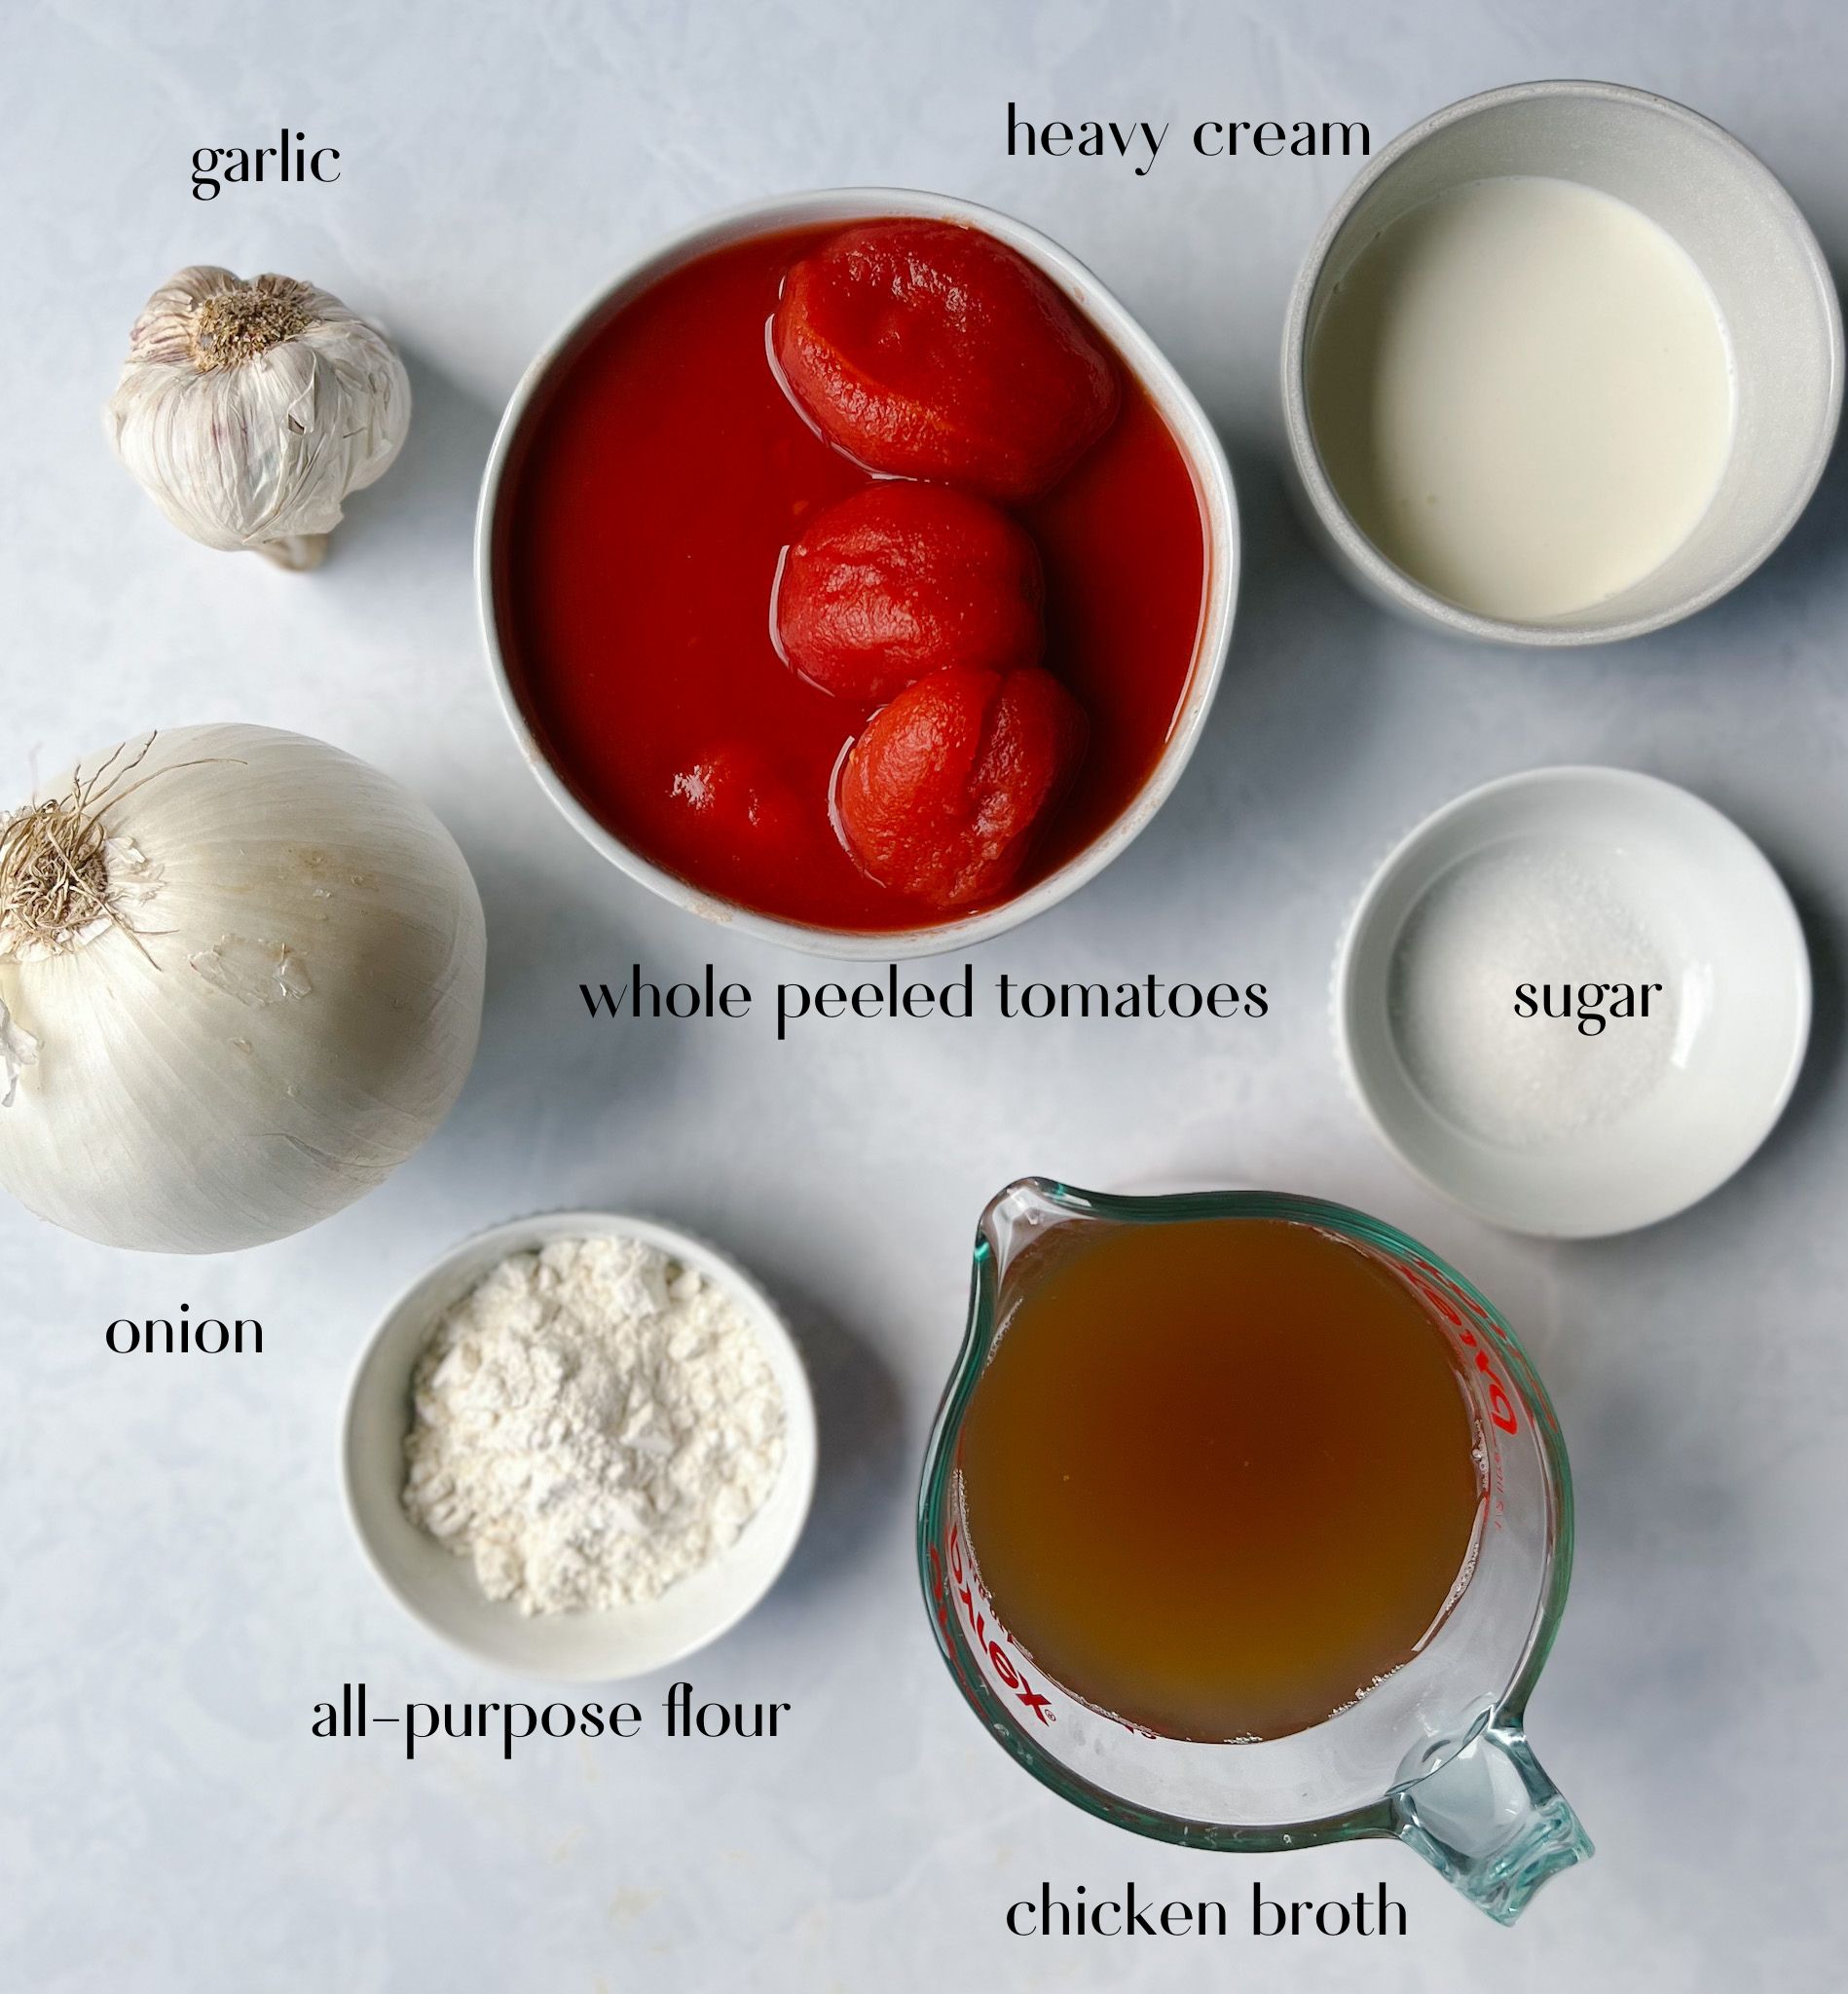 garlic, heavy cream, whole peeled tomatoes, sugar, onion, flour, and chicken broth.